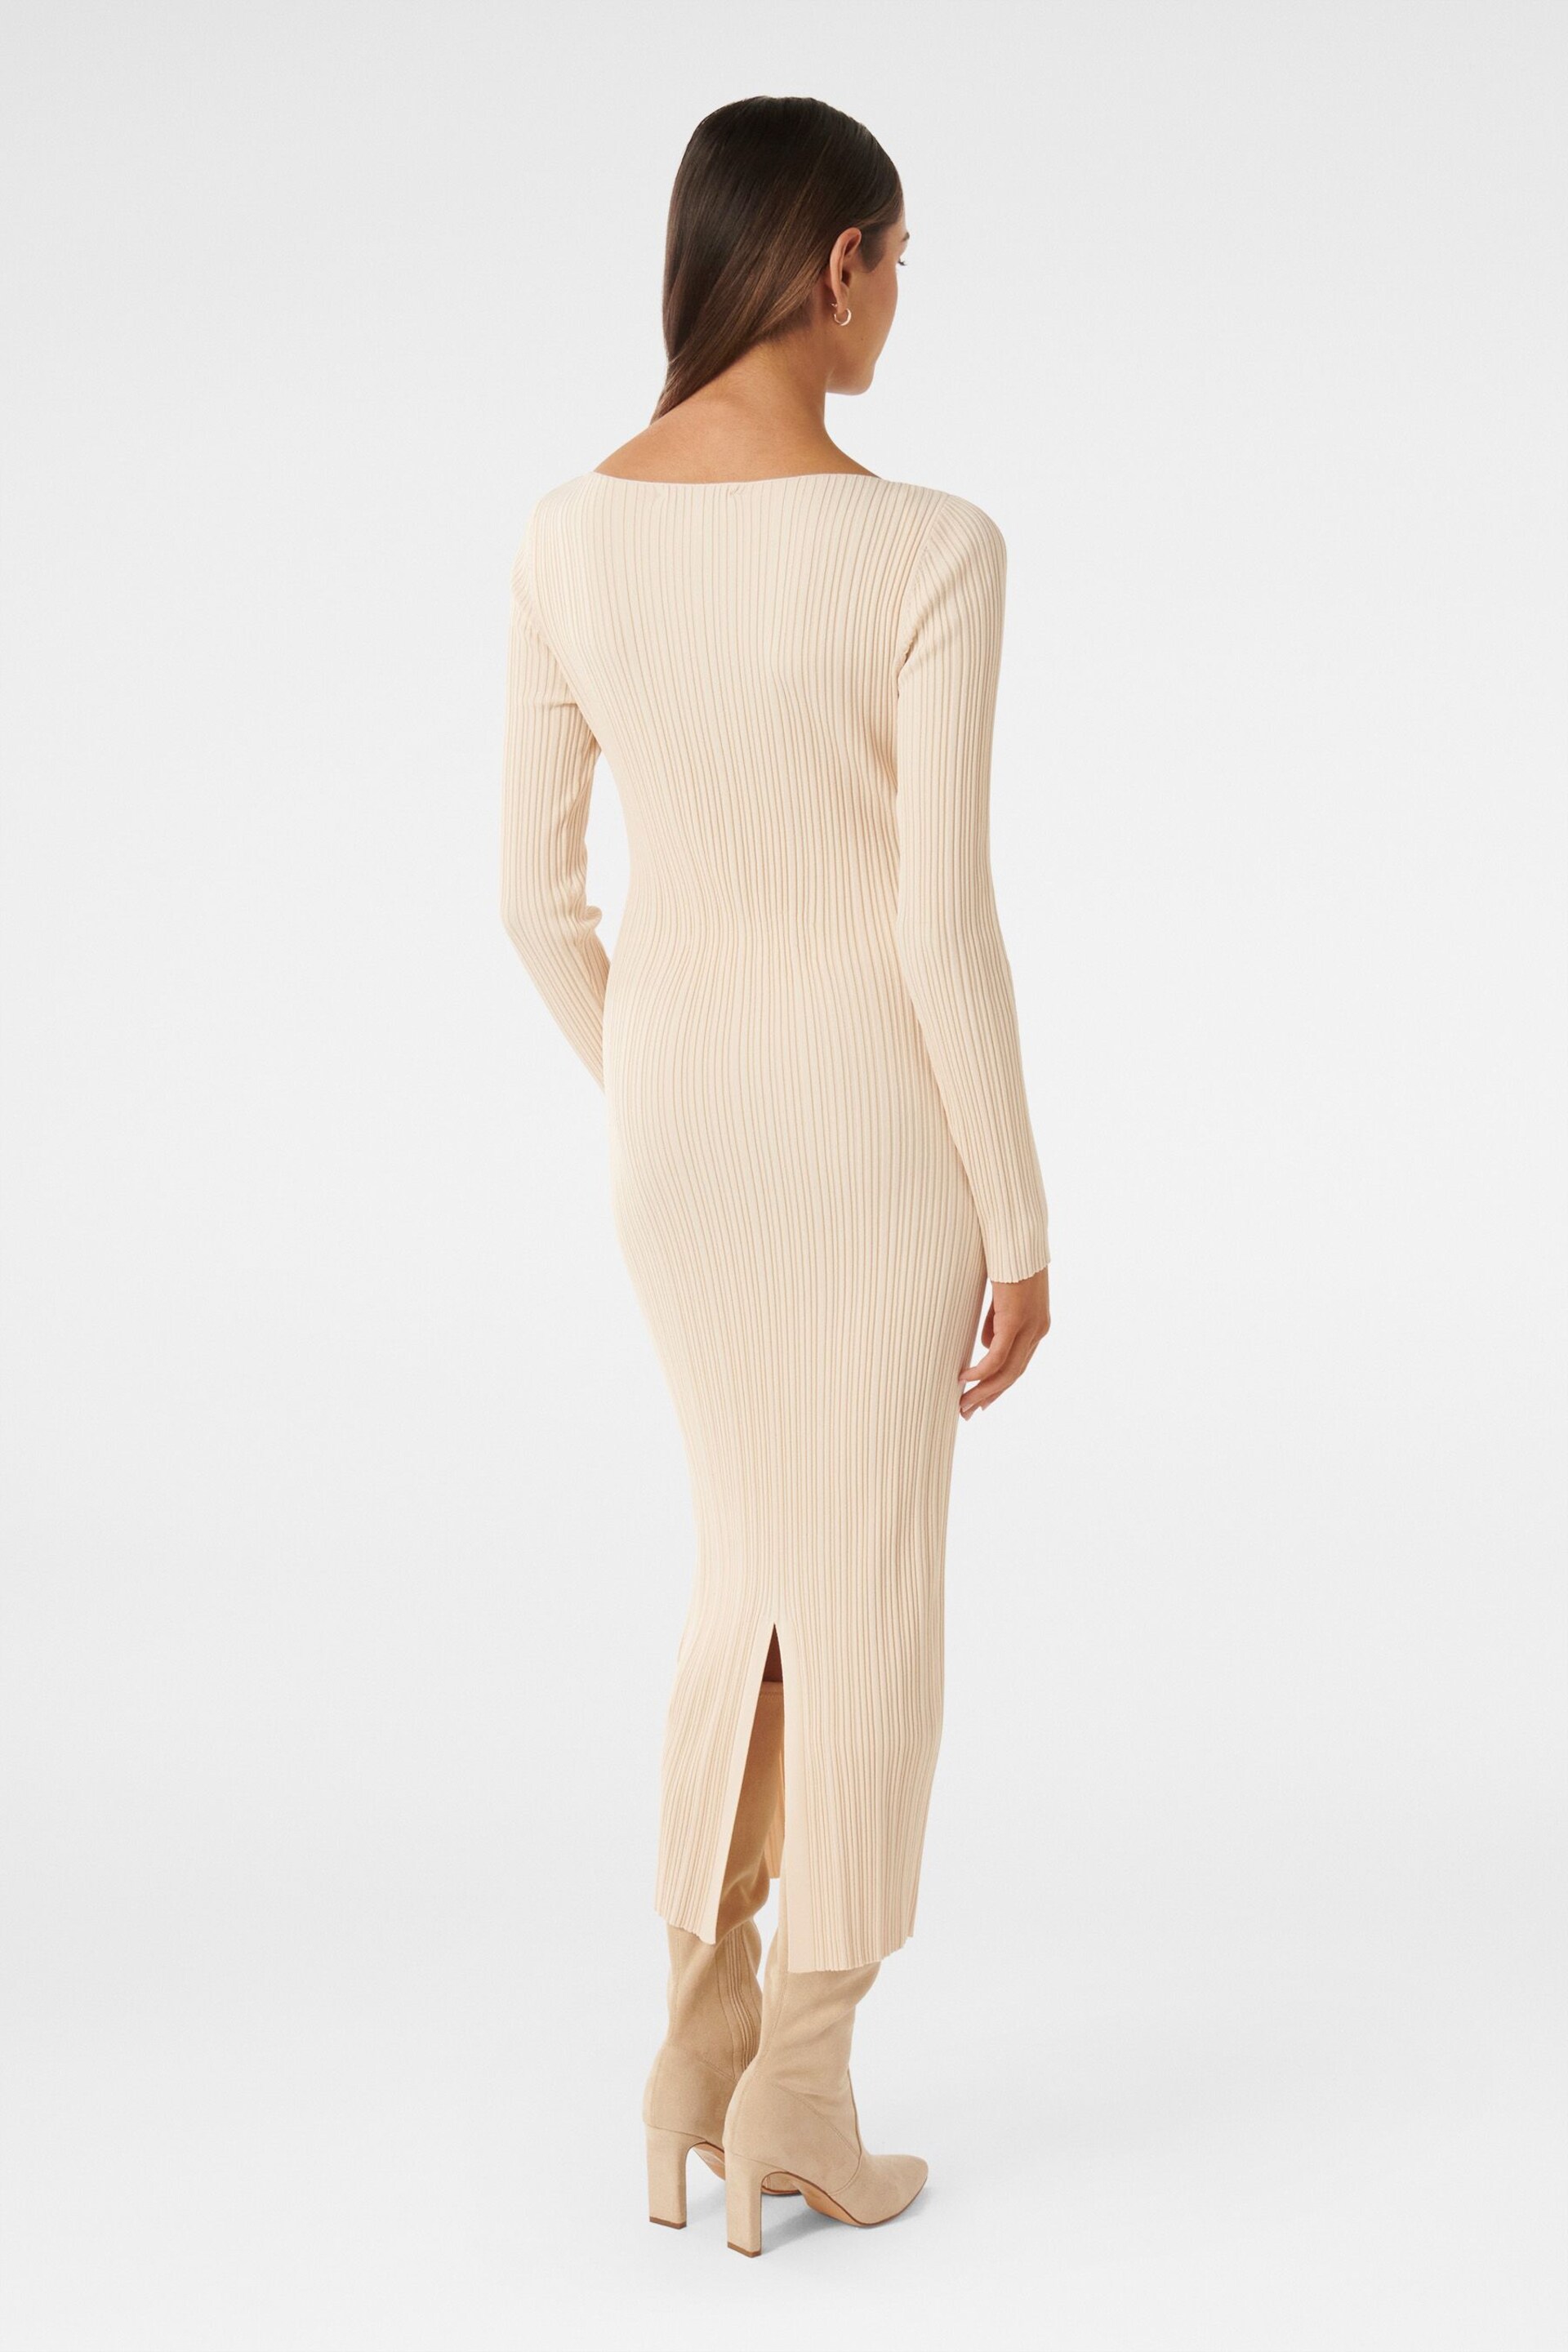 Forever New Cream Petite Evie Long Sleeve Rib Knit Dress - Image 2 of 4